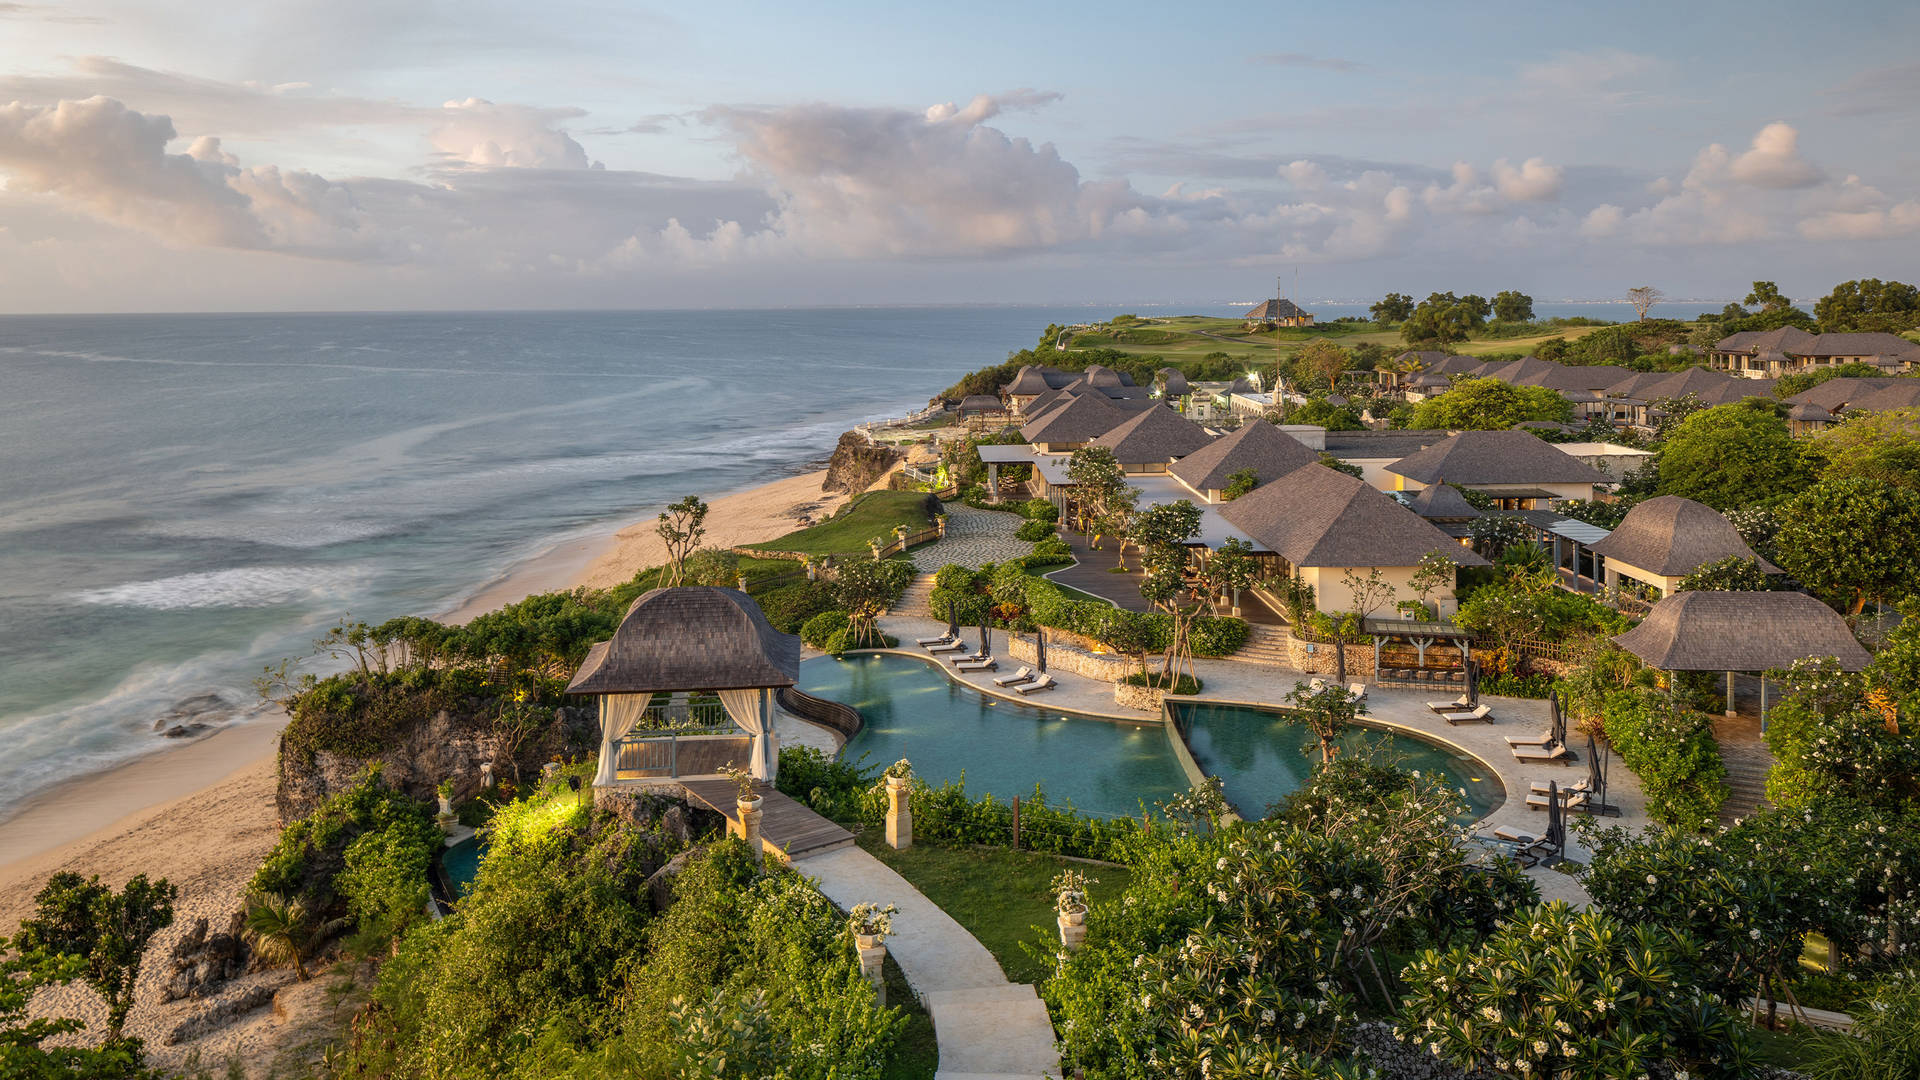 View of the beach front resort at Jumeirah Bali